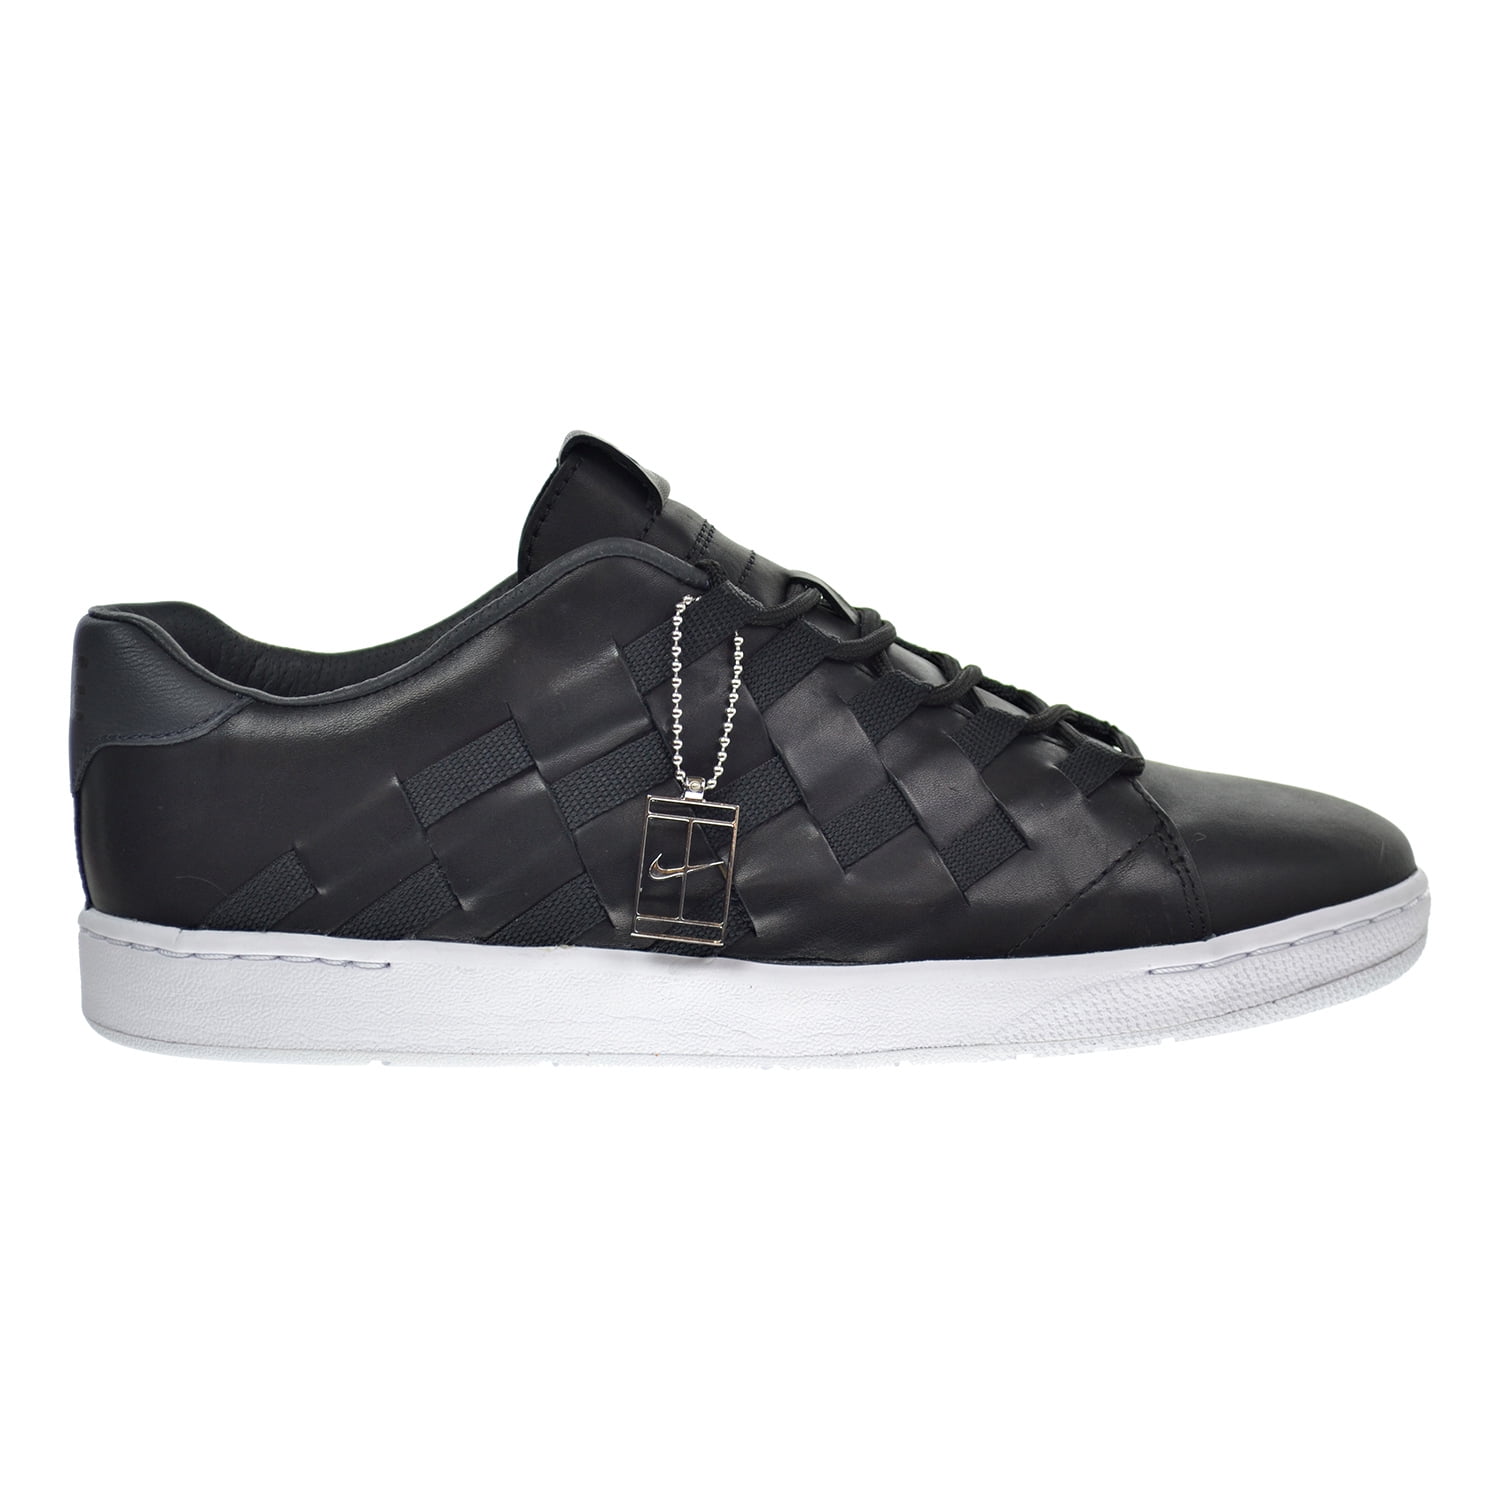 Nike Classic Ultra PRM QS Men's Shoes Black/Anthracite/White830699-002 US) - Walmart.com